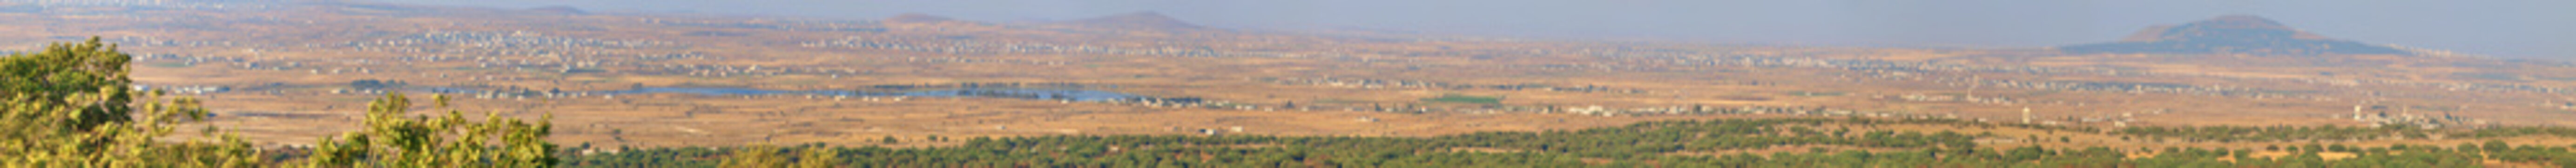 Panoramic view of Syrian territory